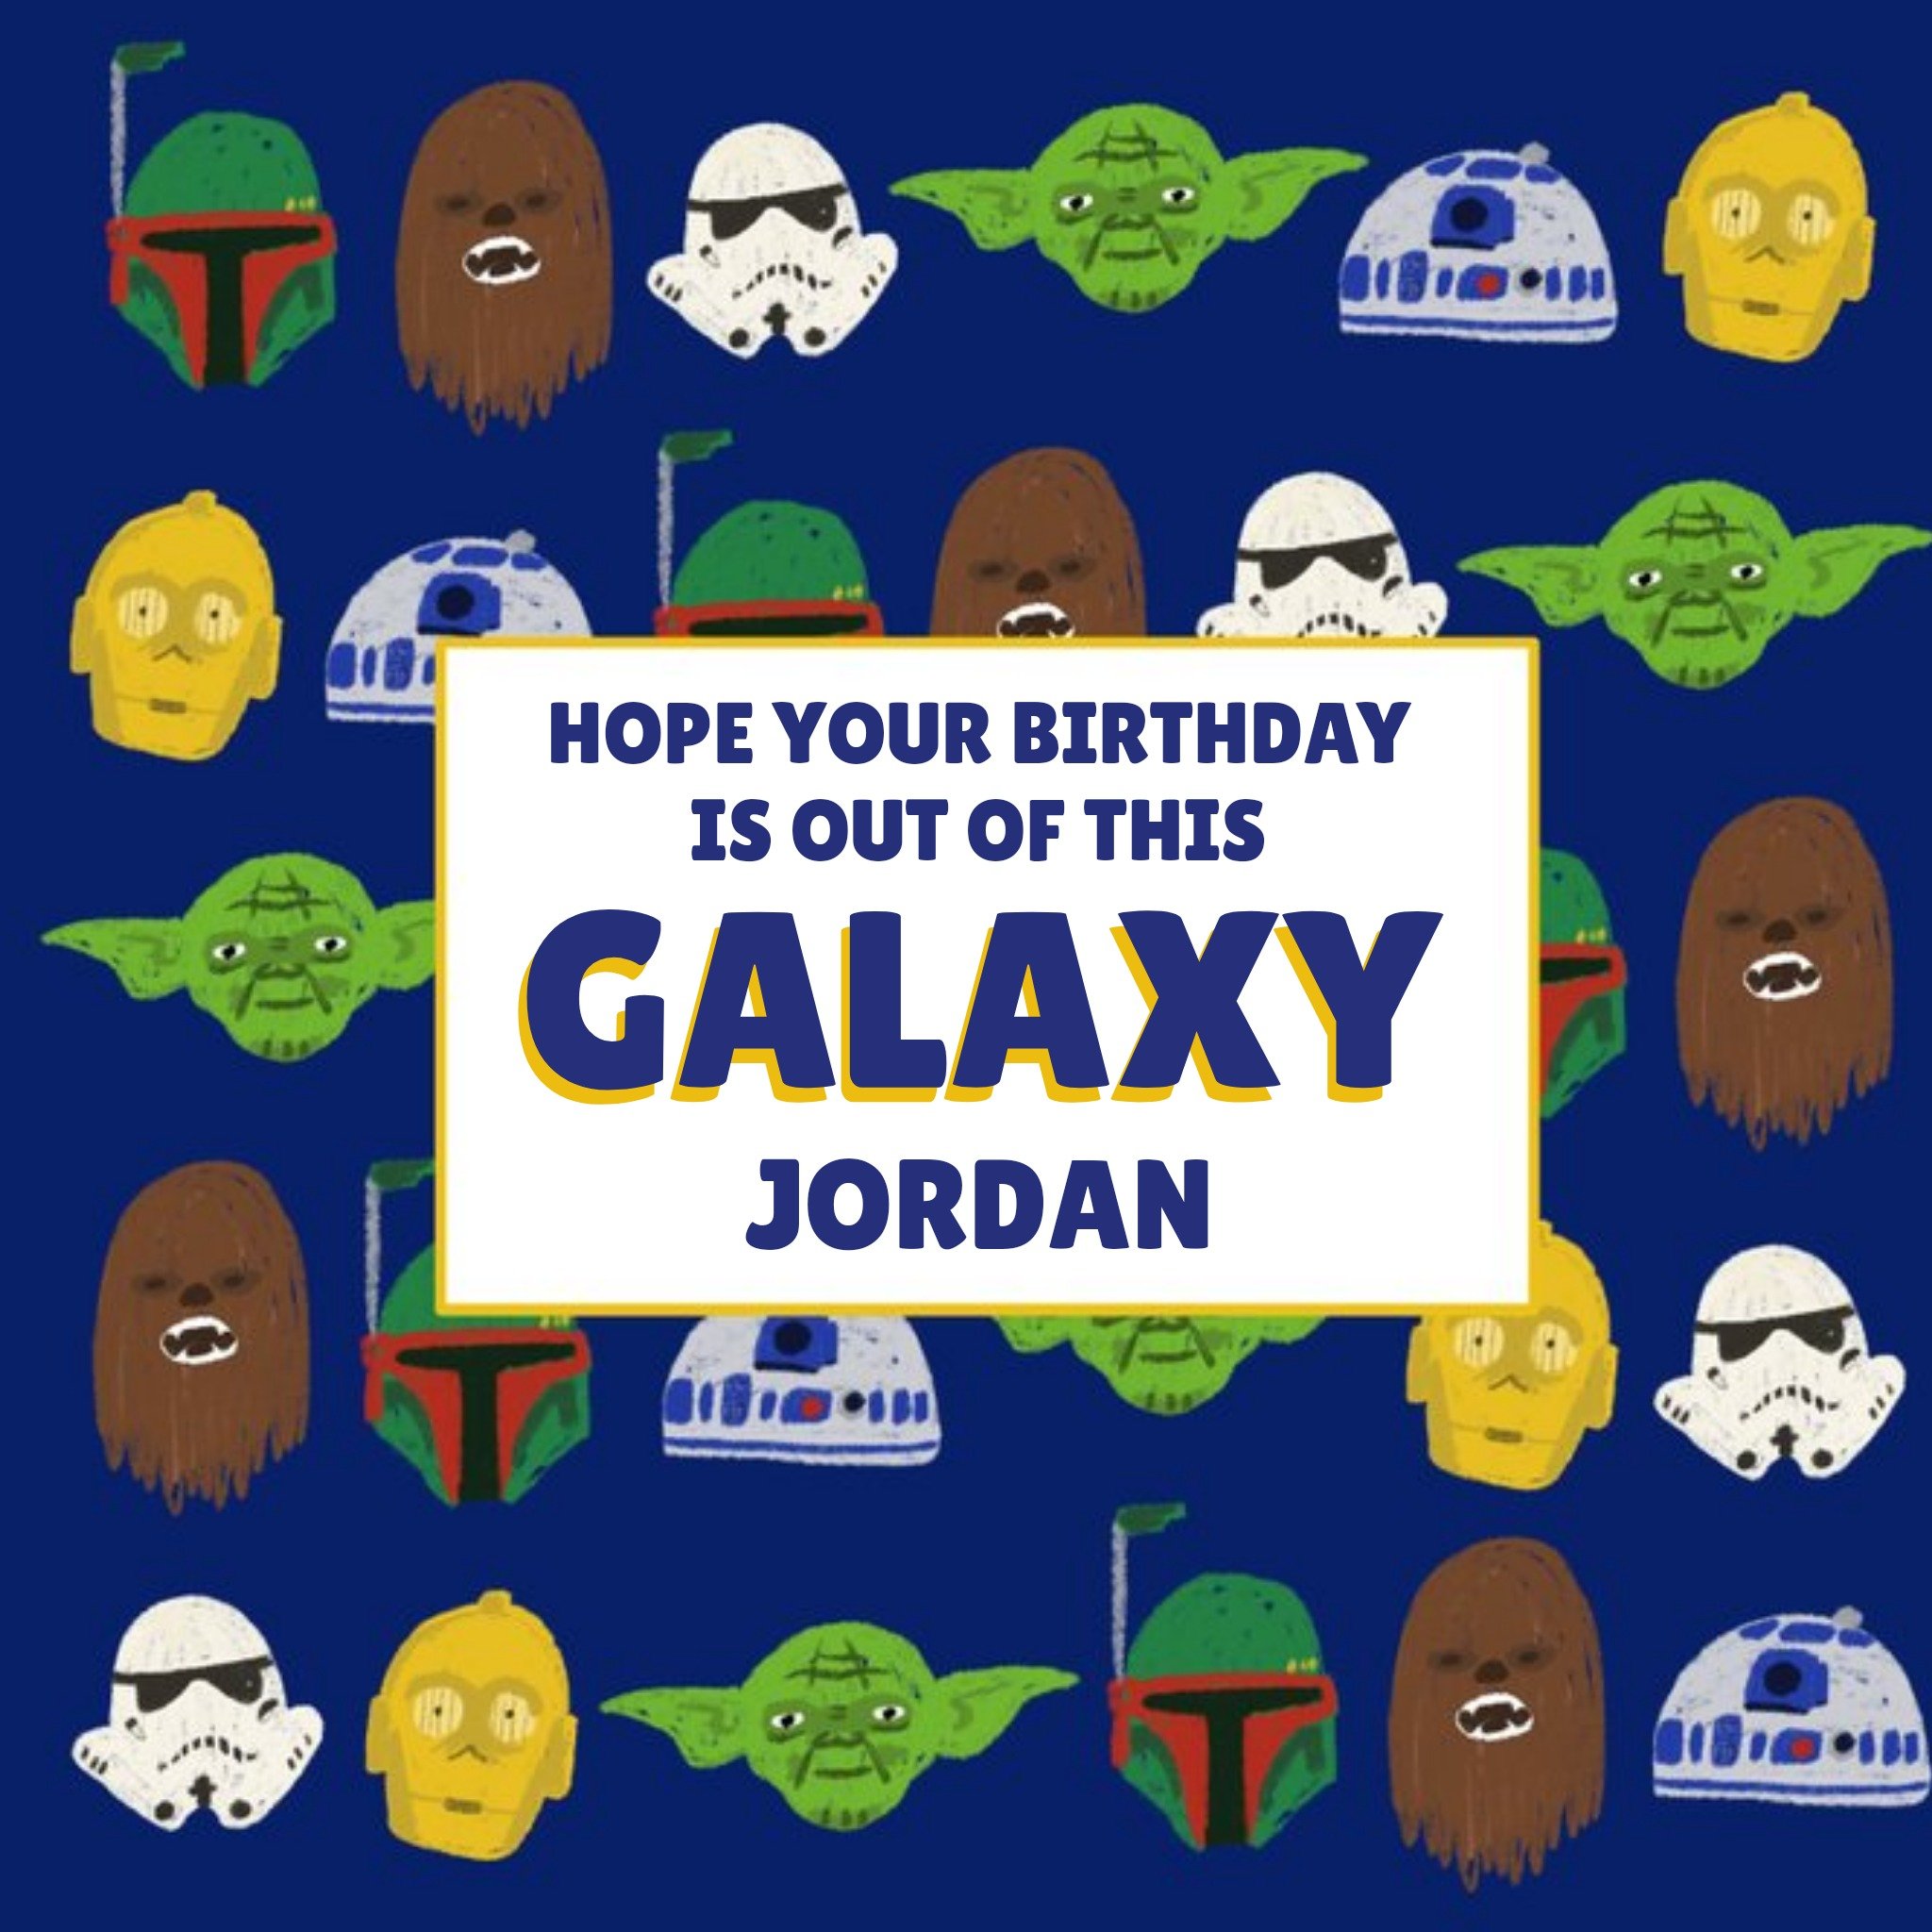 Disney Star Wars Boba Fett Chewbacca Yoda R2D2 Stormtrooper Out Of This Galaxy Kids Birthday Card, S